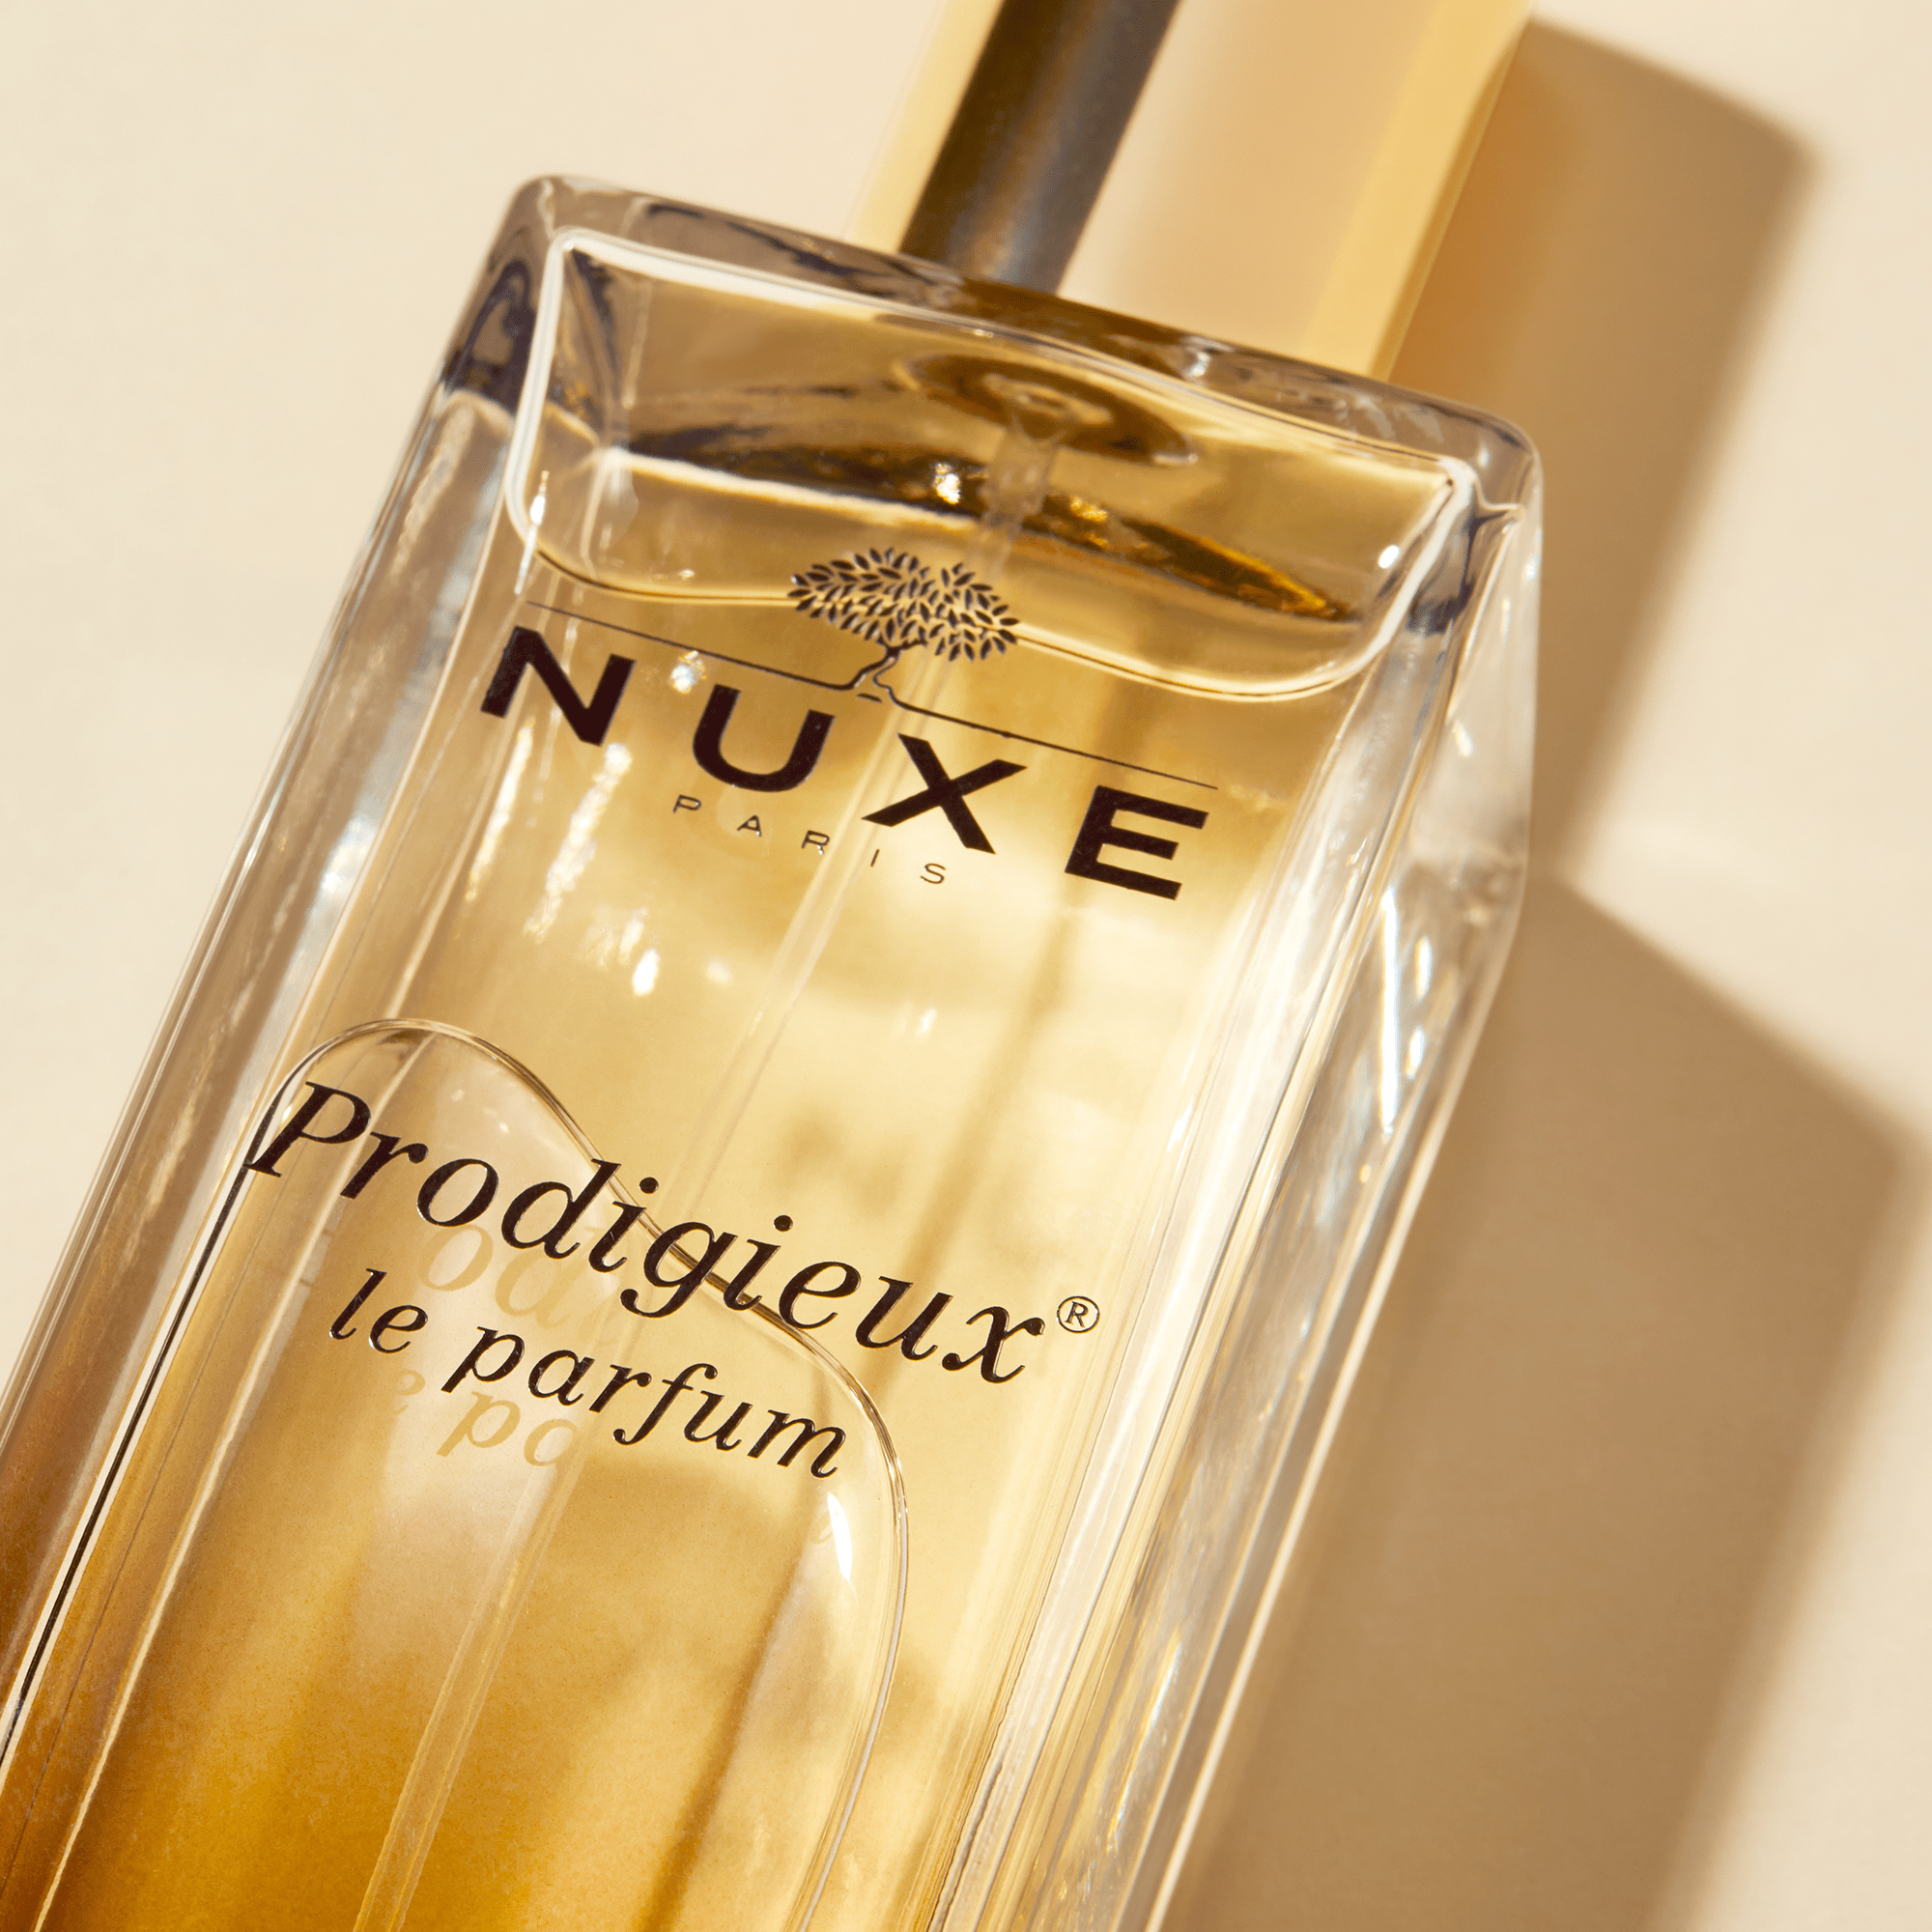 Fragancia Prodigieux® le parfum - 50ml | NUXE